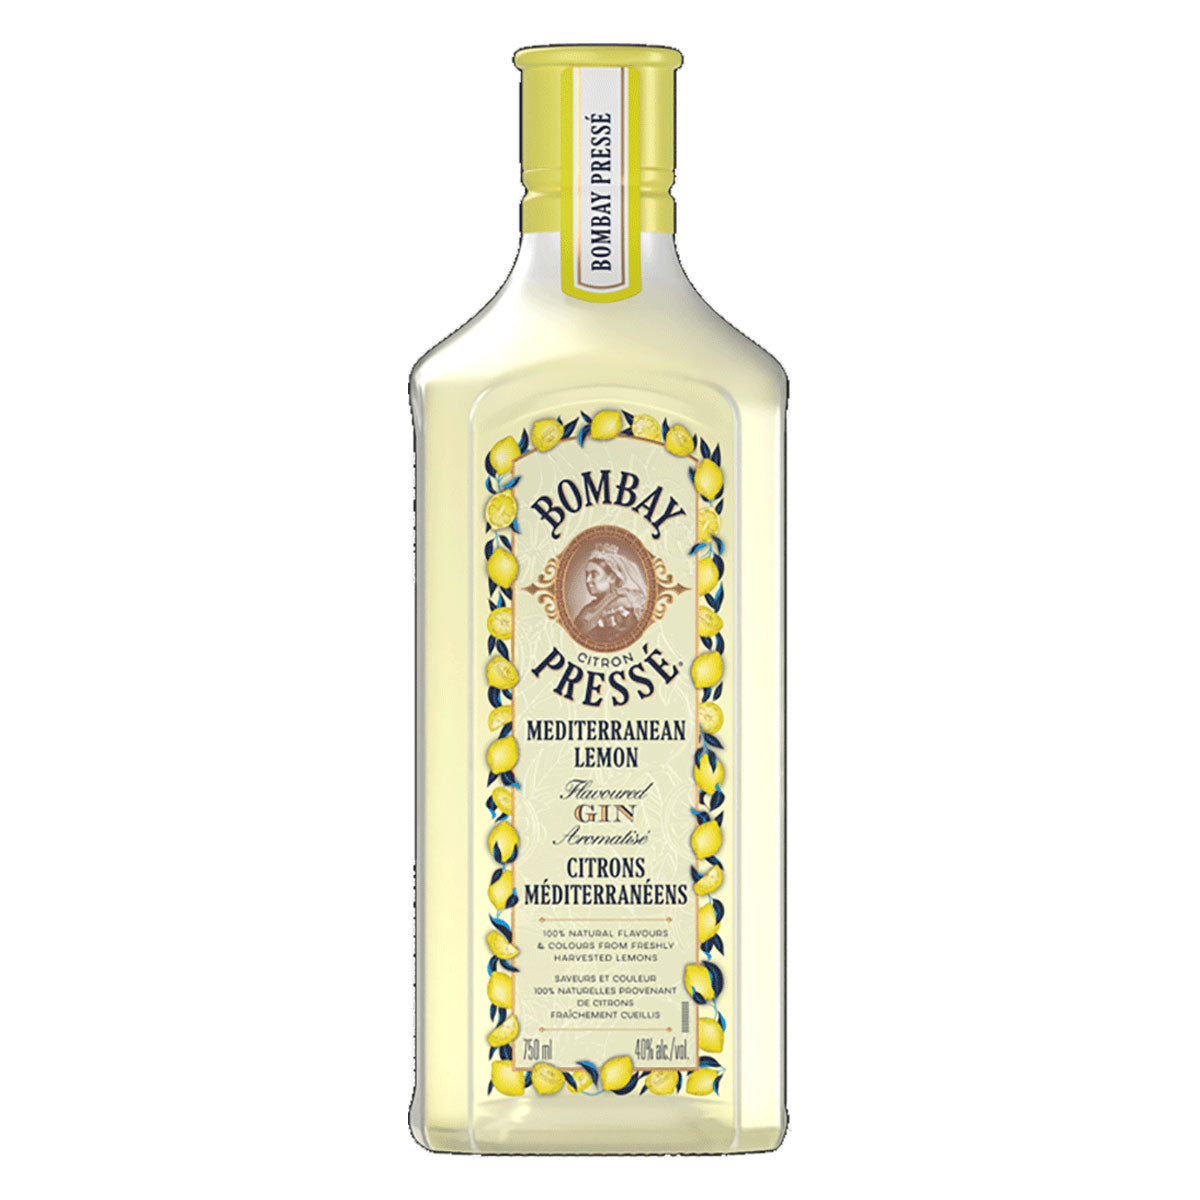 Lemon Presse – Mediterranean Citron 750ml Bombay Gin